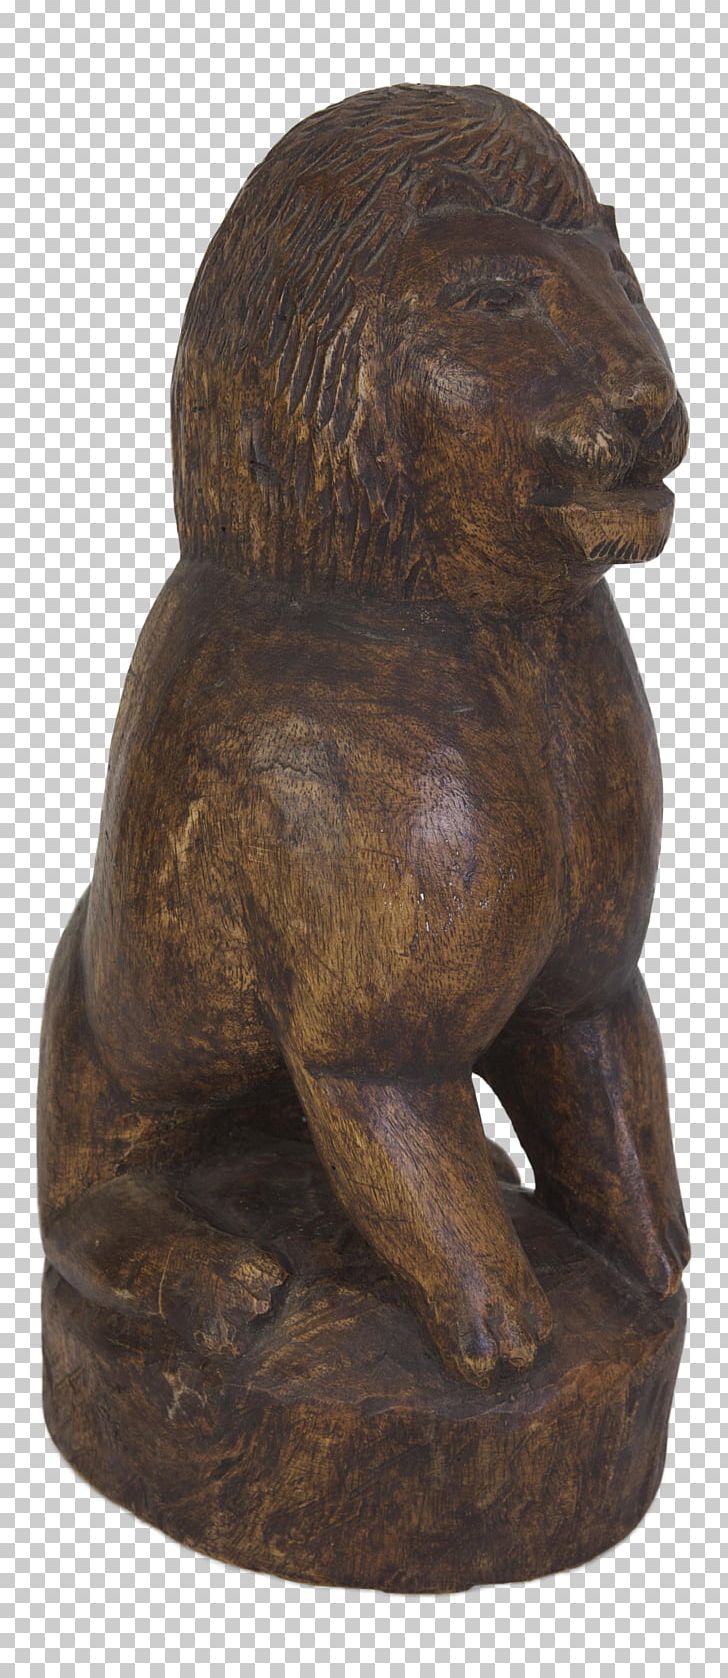 Bronze Sculpture Figurine Animal PNG, Clipart, Animal, Artifact, Bronze, Bronze Sculpture, Carving Free PNG Download